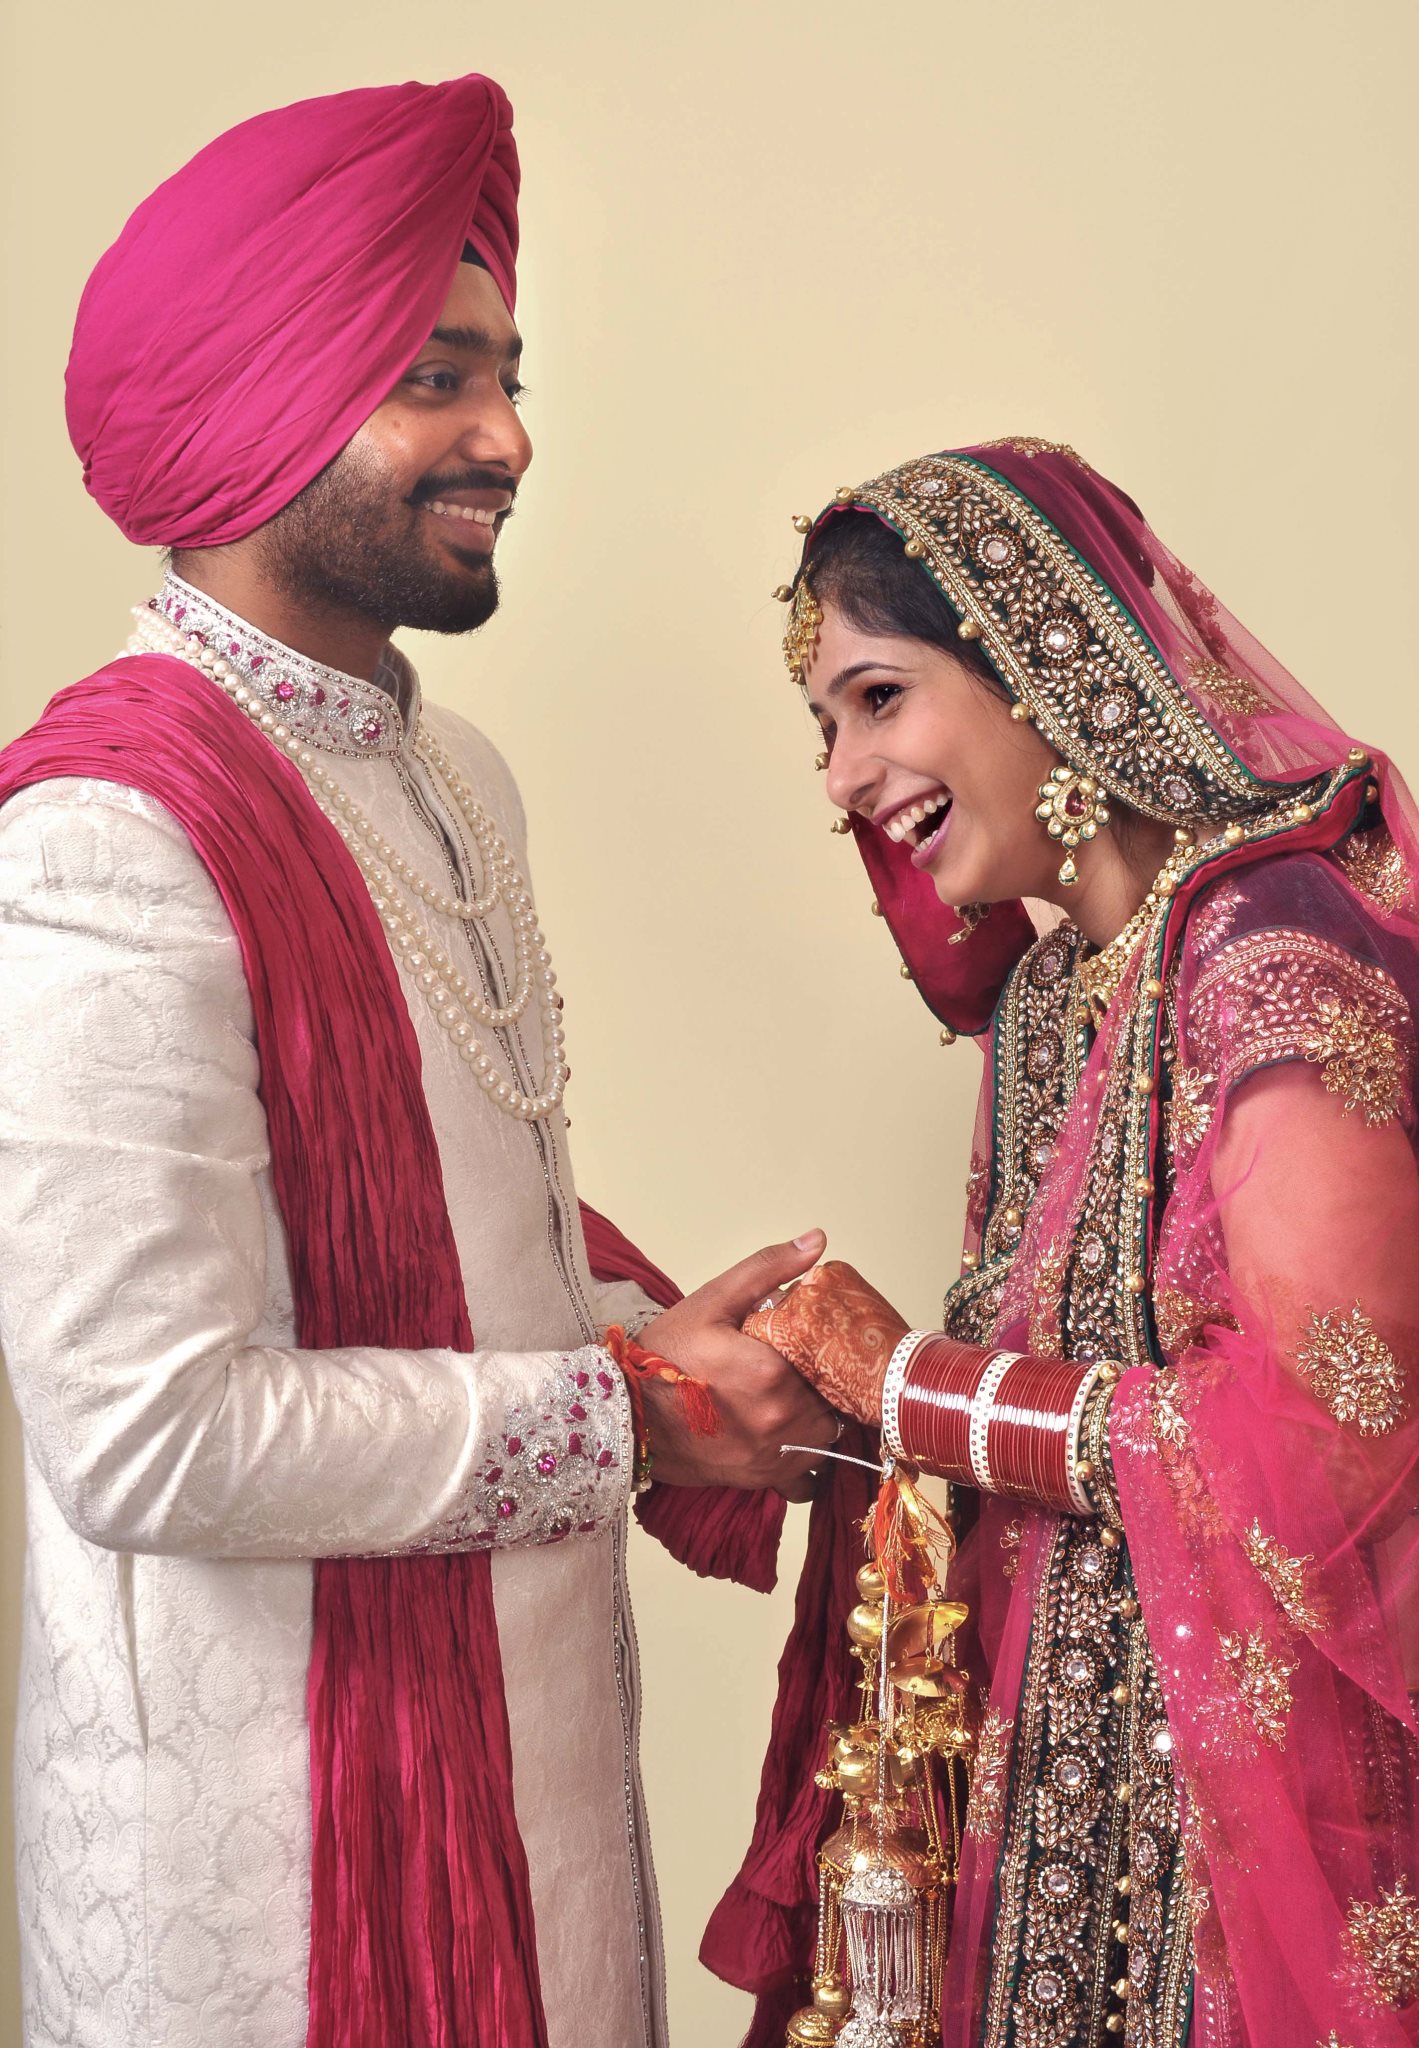 [42+] Punjabi Couples Wallpapers on WallpaperSafari